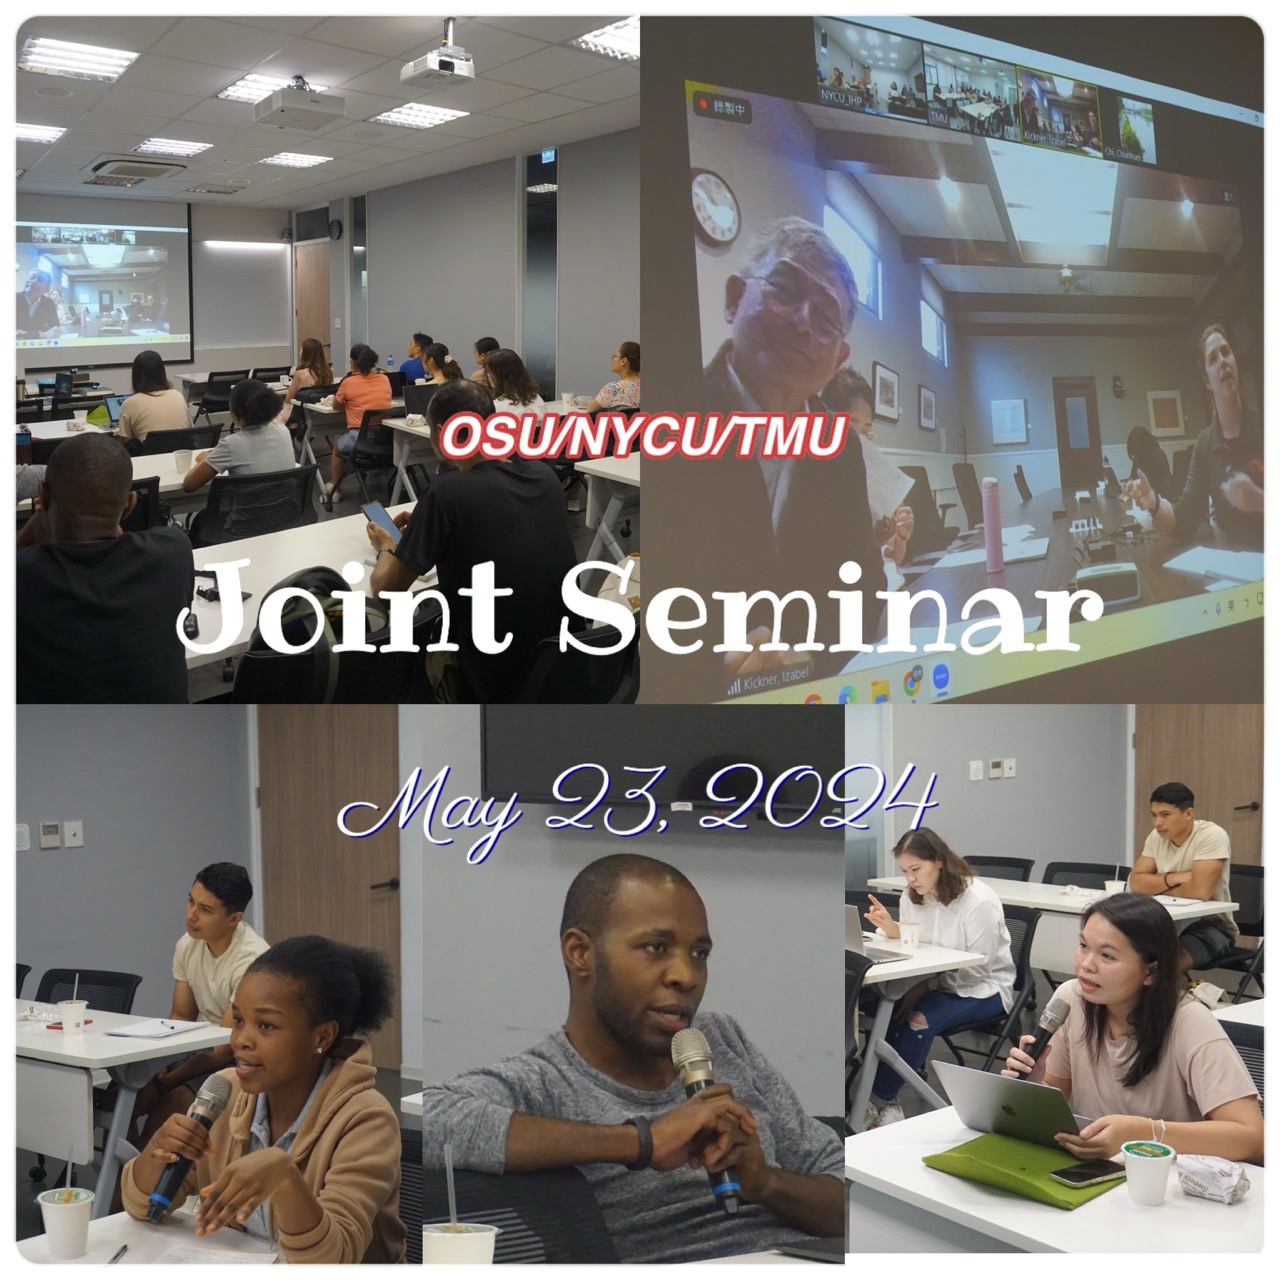 Joint Seminar: OSU/TMU/NYCU on May 23 